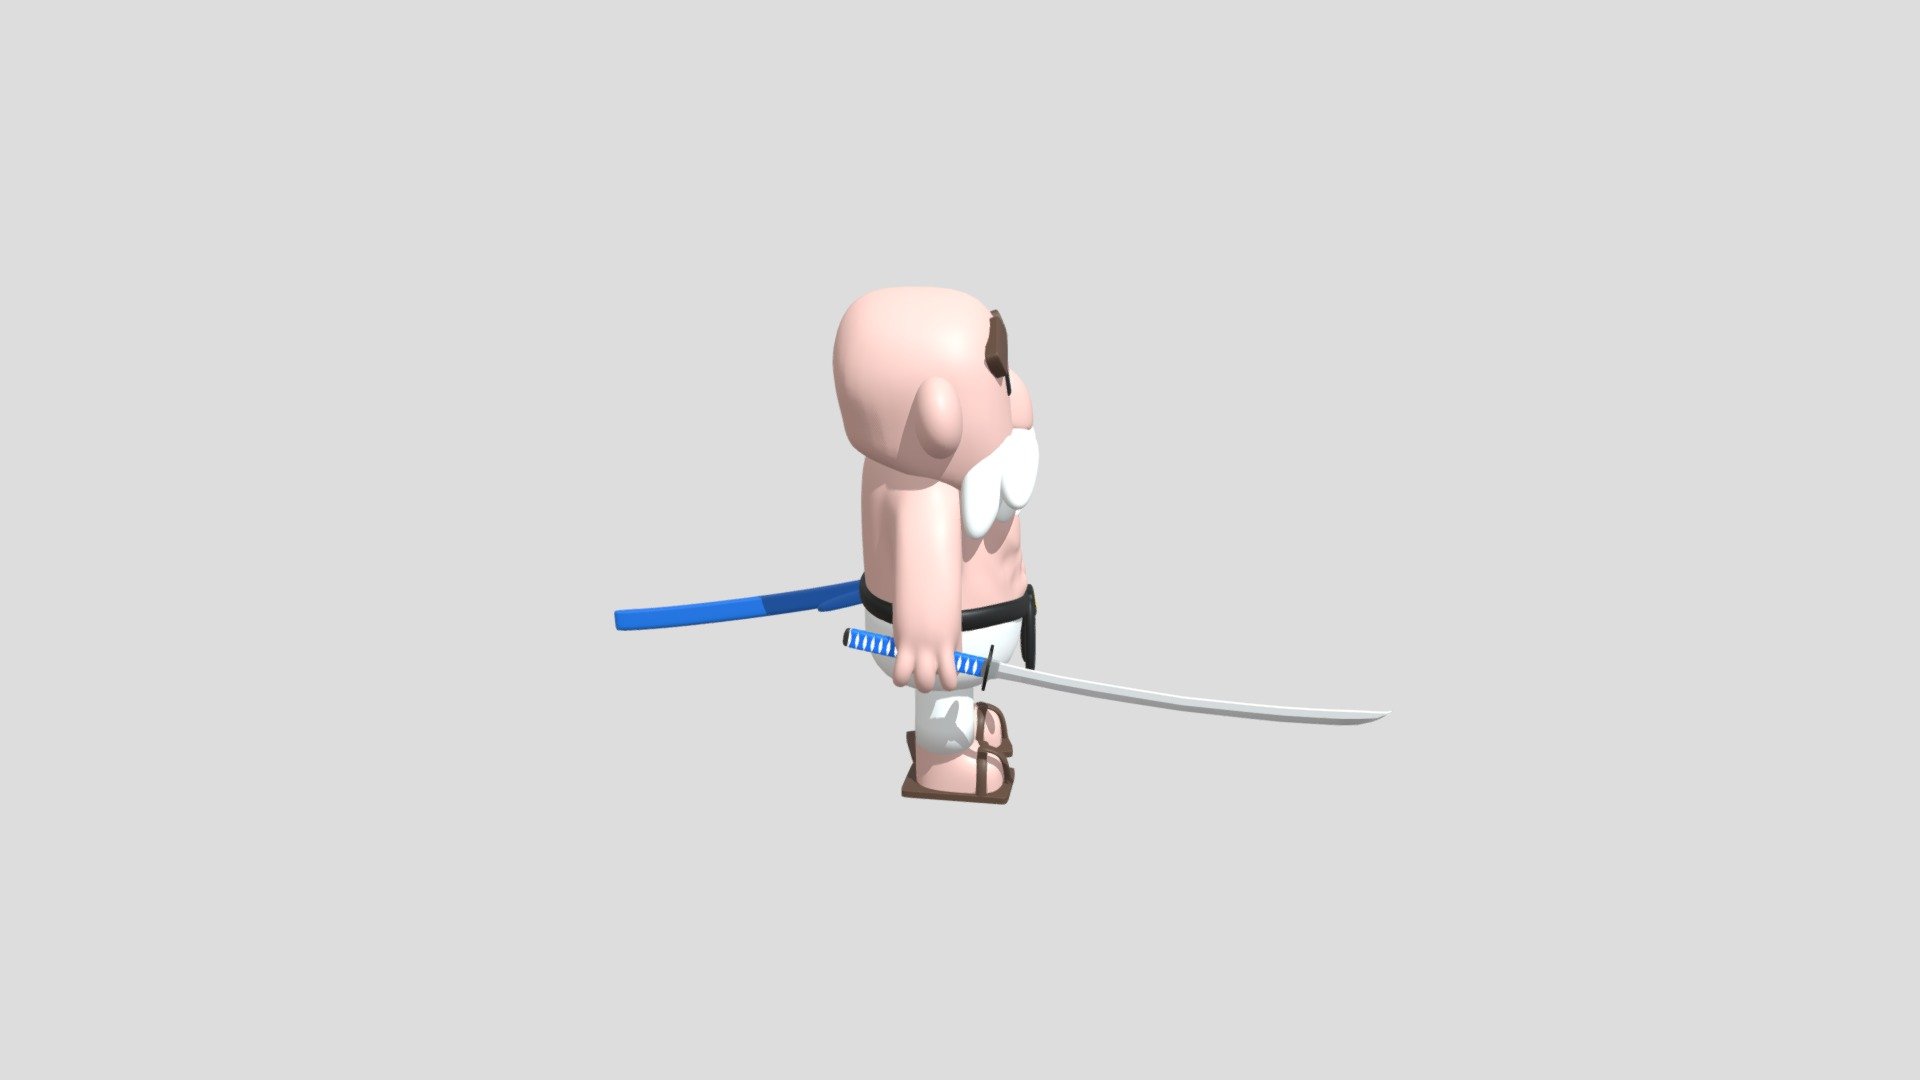 A mini character of a samurai swordsman. Inspired after Keelan Jon. Feel free to use, CC Attricution applies.

@CalifornianDream
CC Attribution - Samurai Swordsman Mini Character - Download Free 3D model by CalifornianDream 3d model